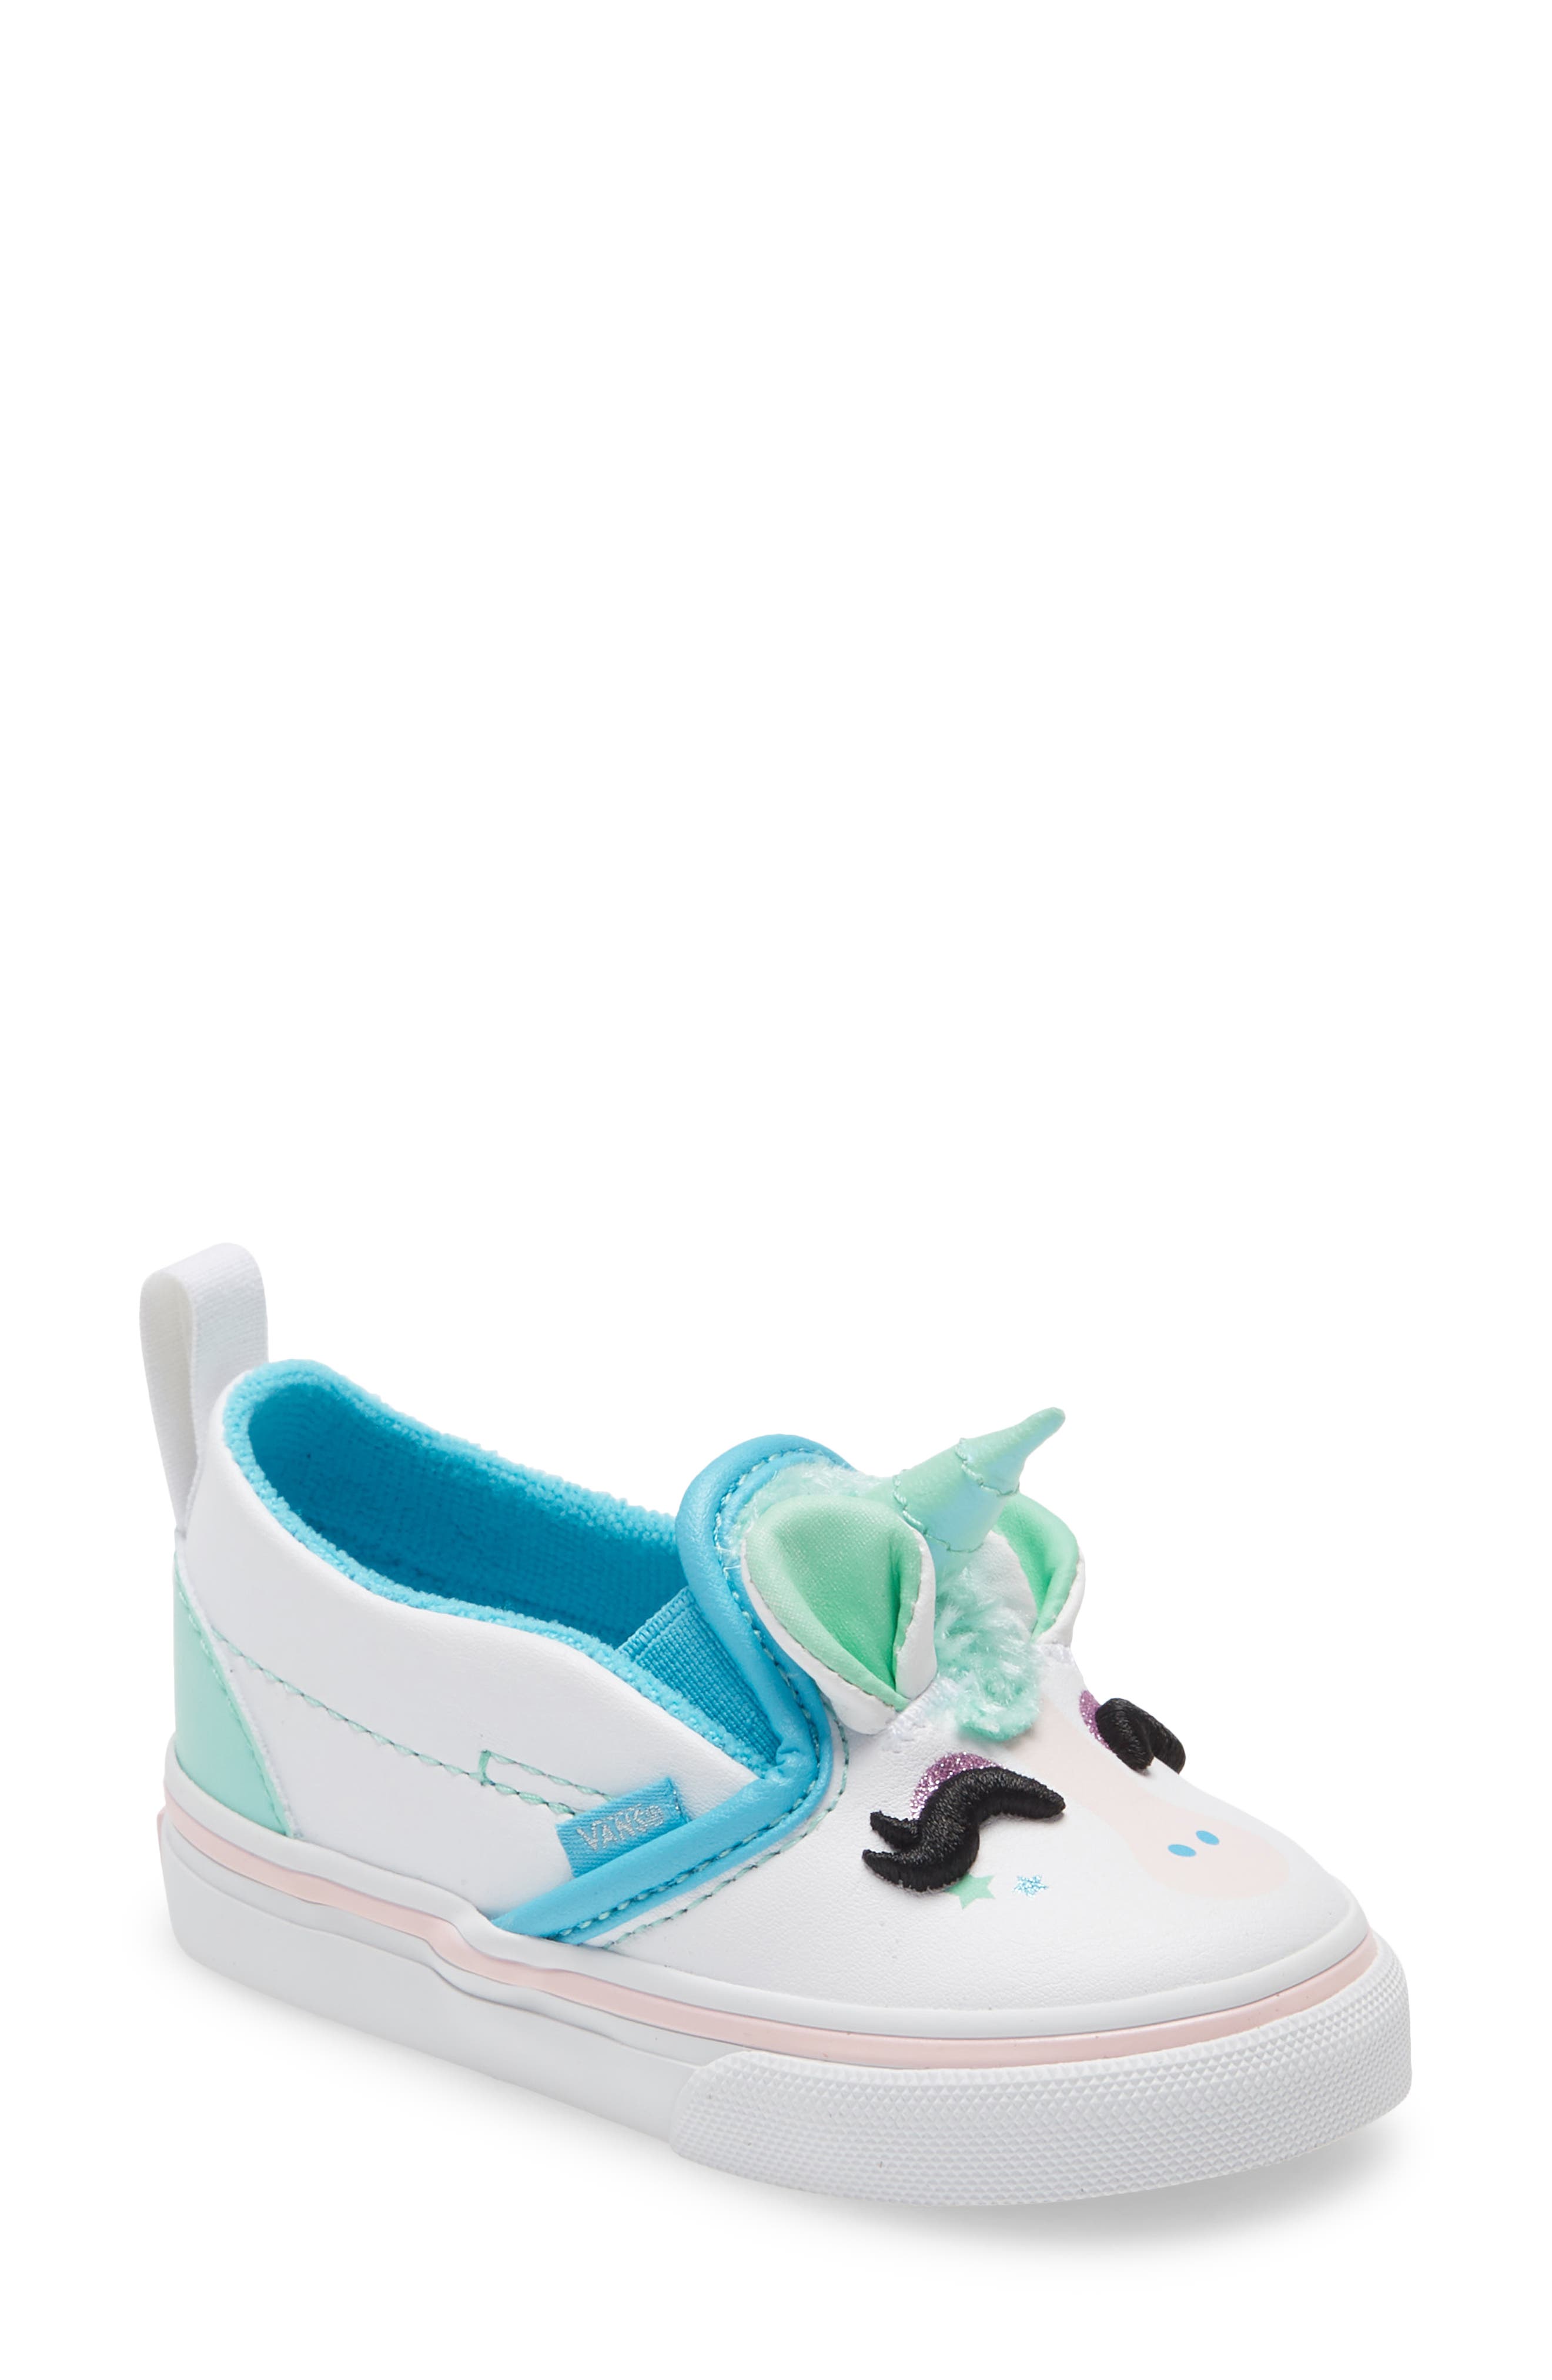 vans unicorn shoes toddler